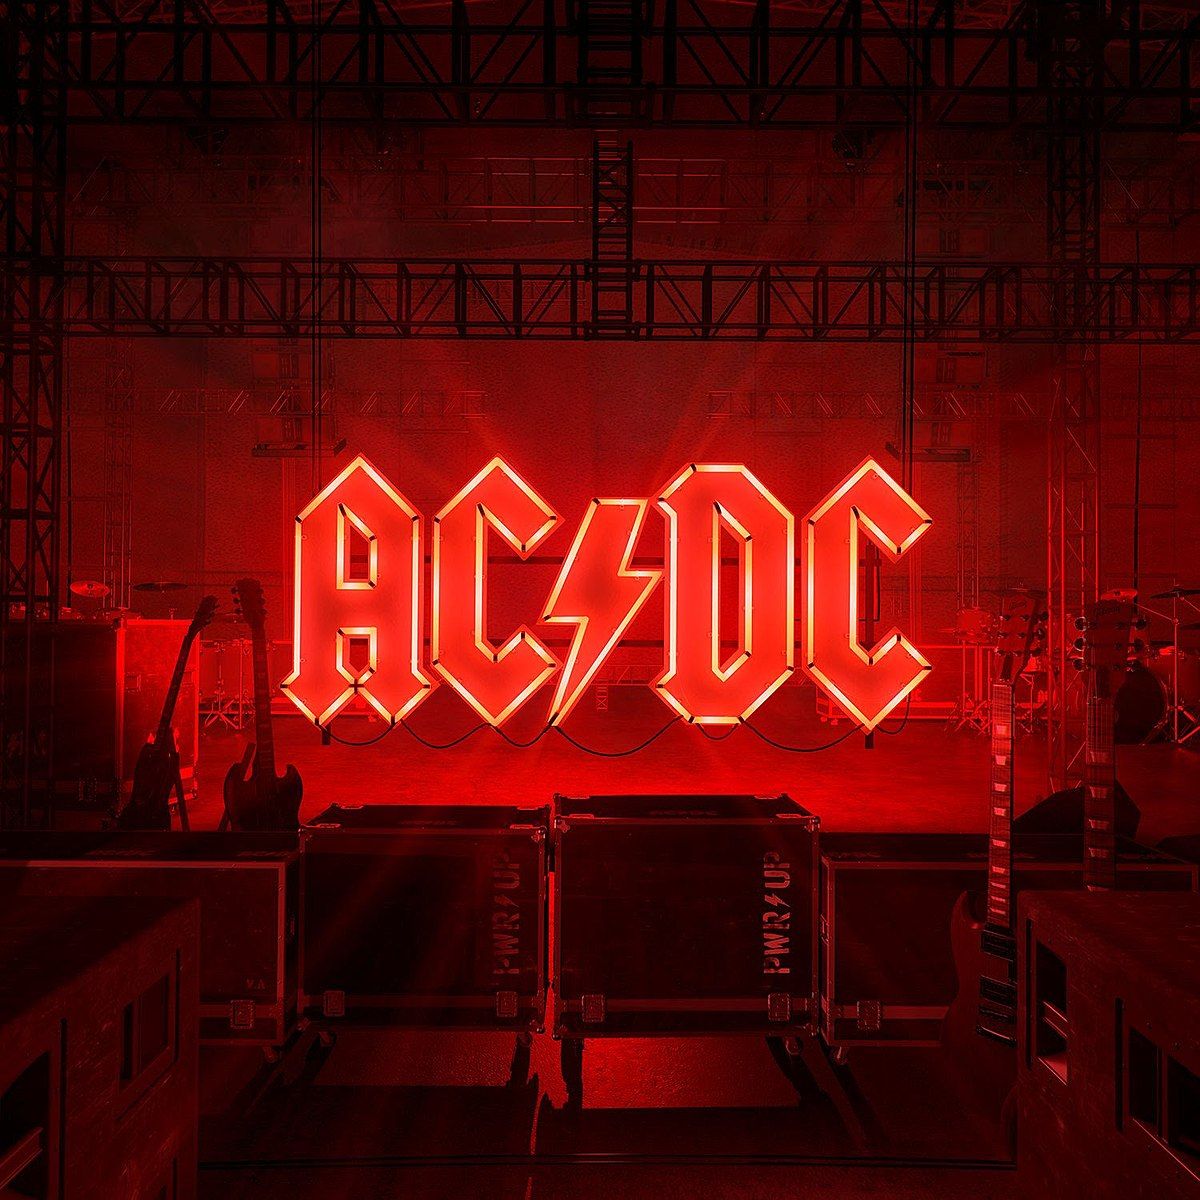 AC/DC - Power Up - LP